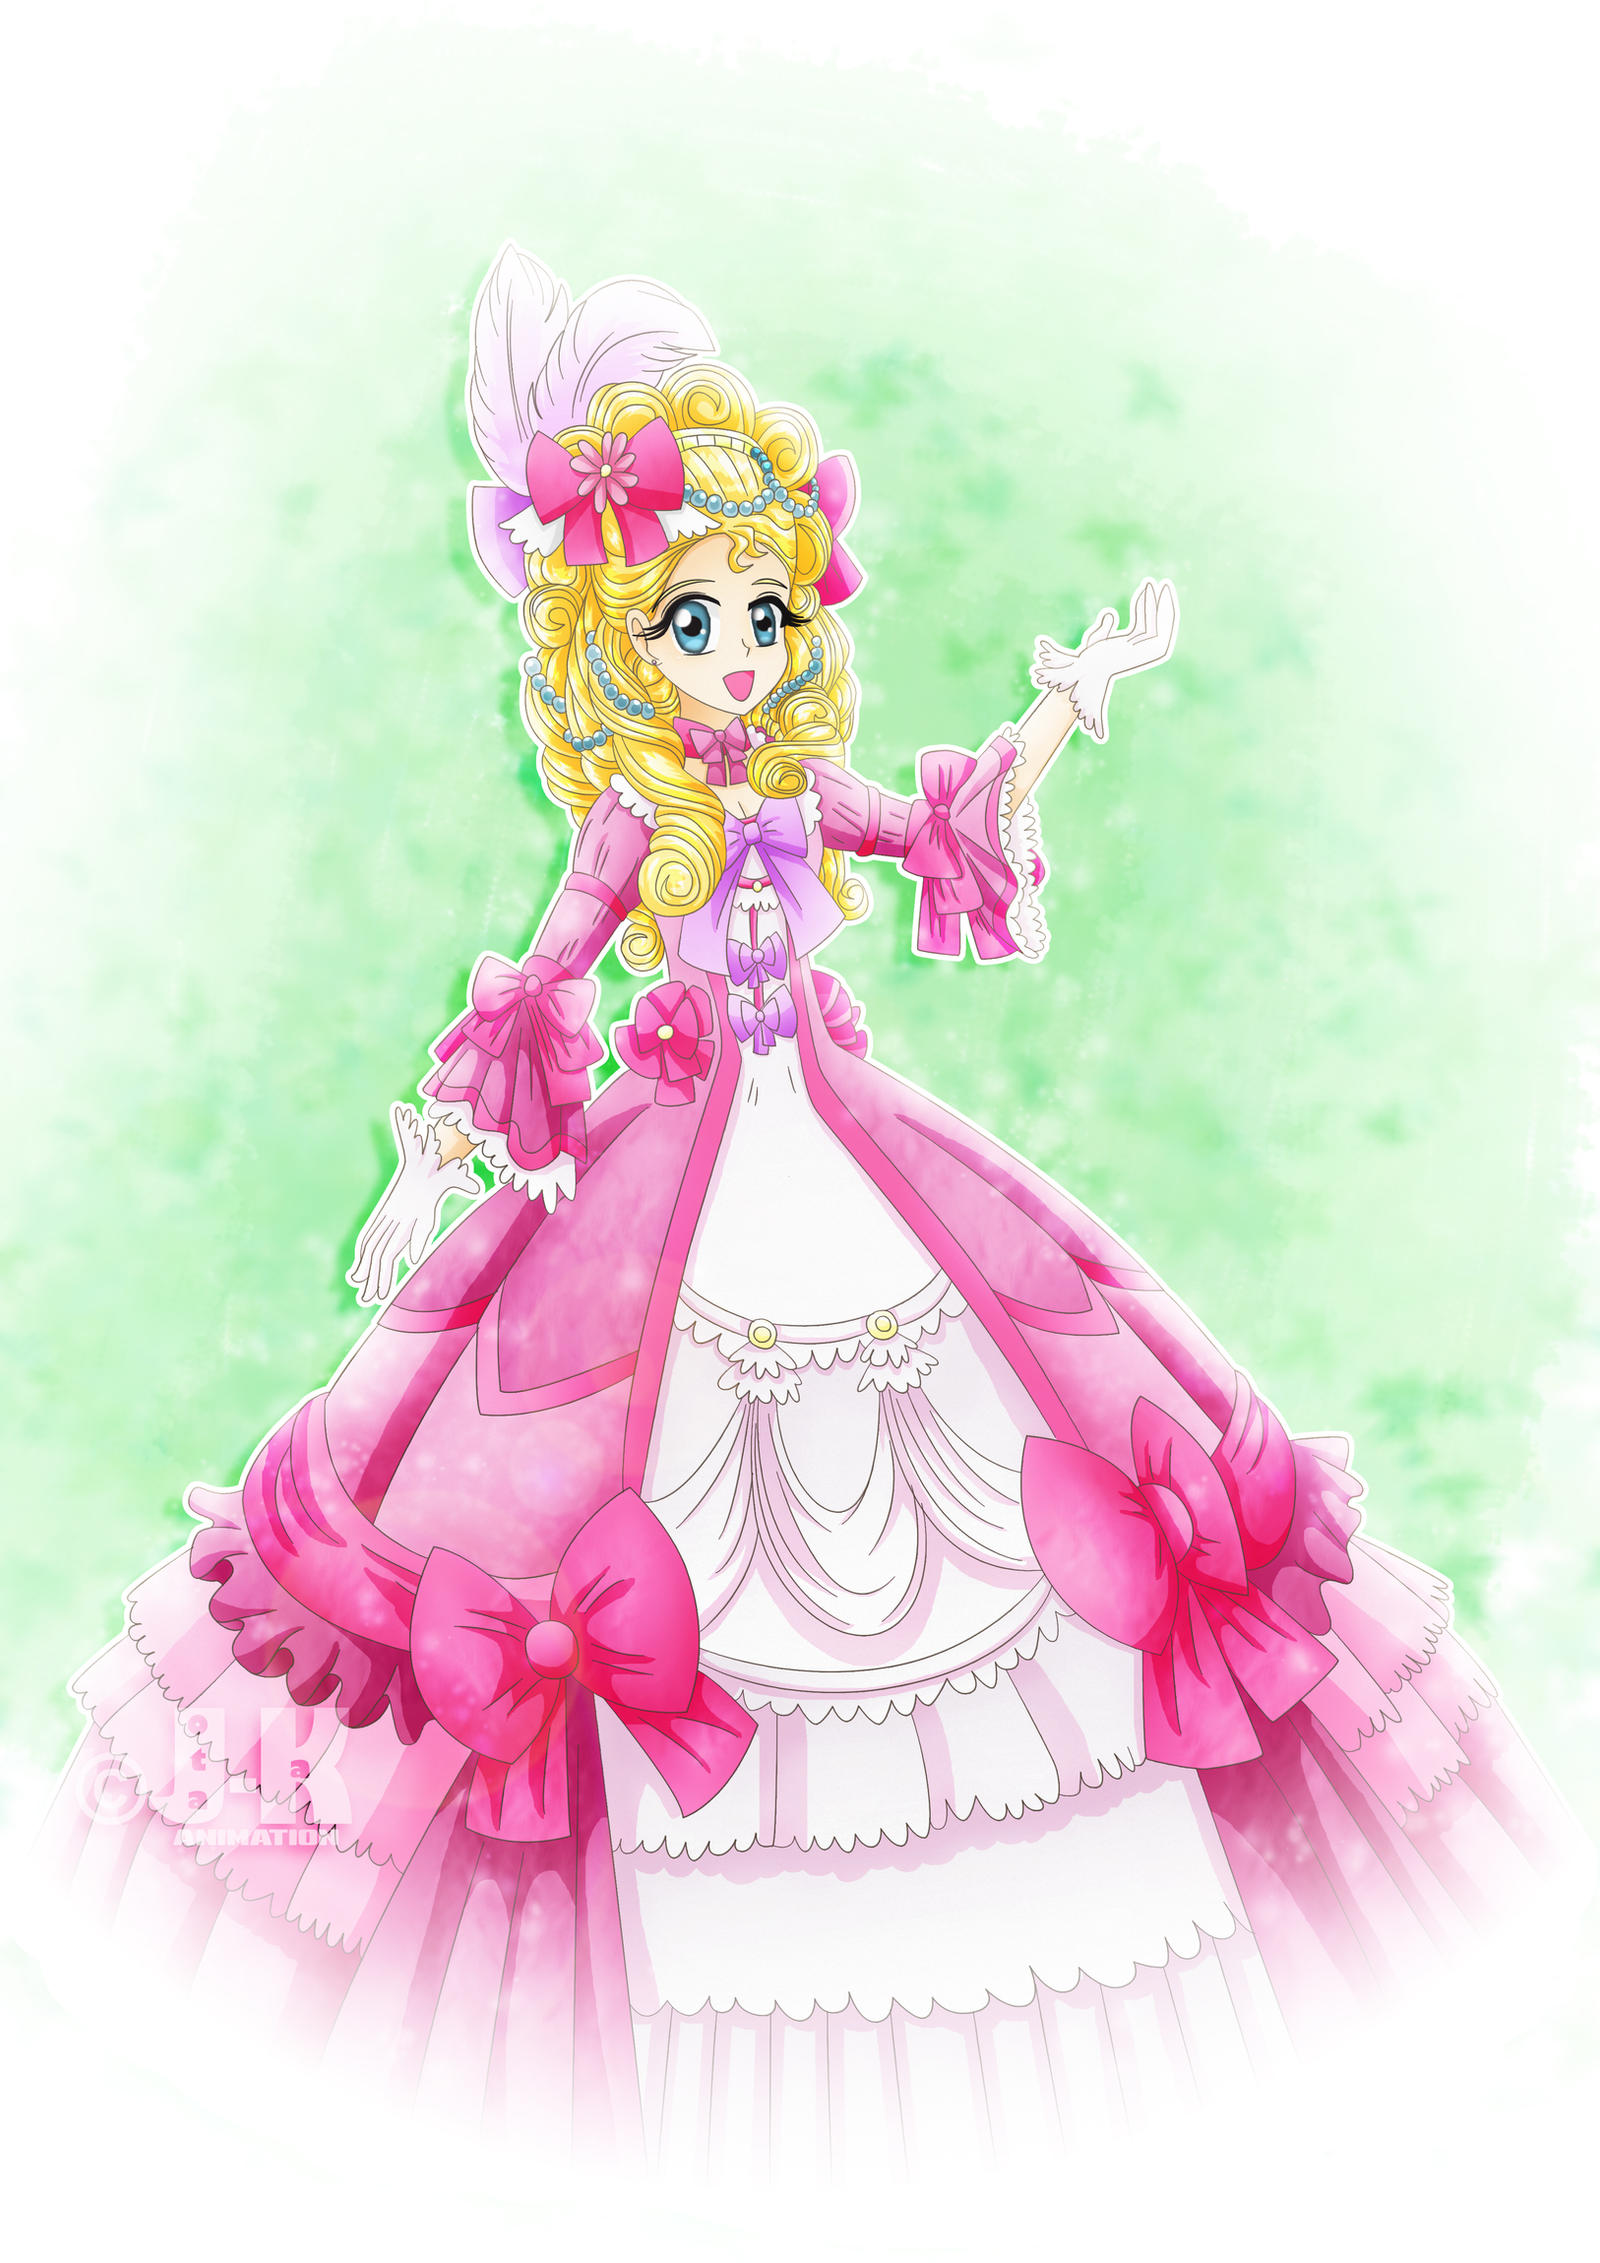 Marie Antoinette_Pink Dress by jotakaanimation on DeviantArt